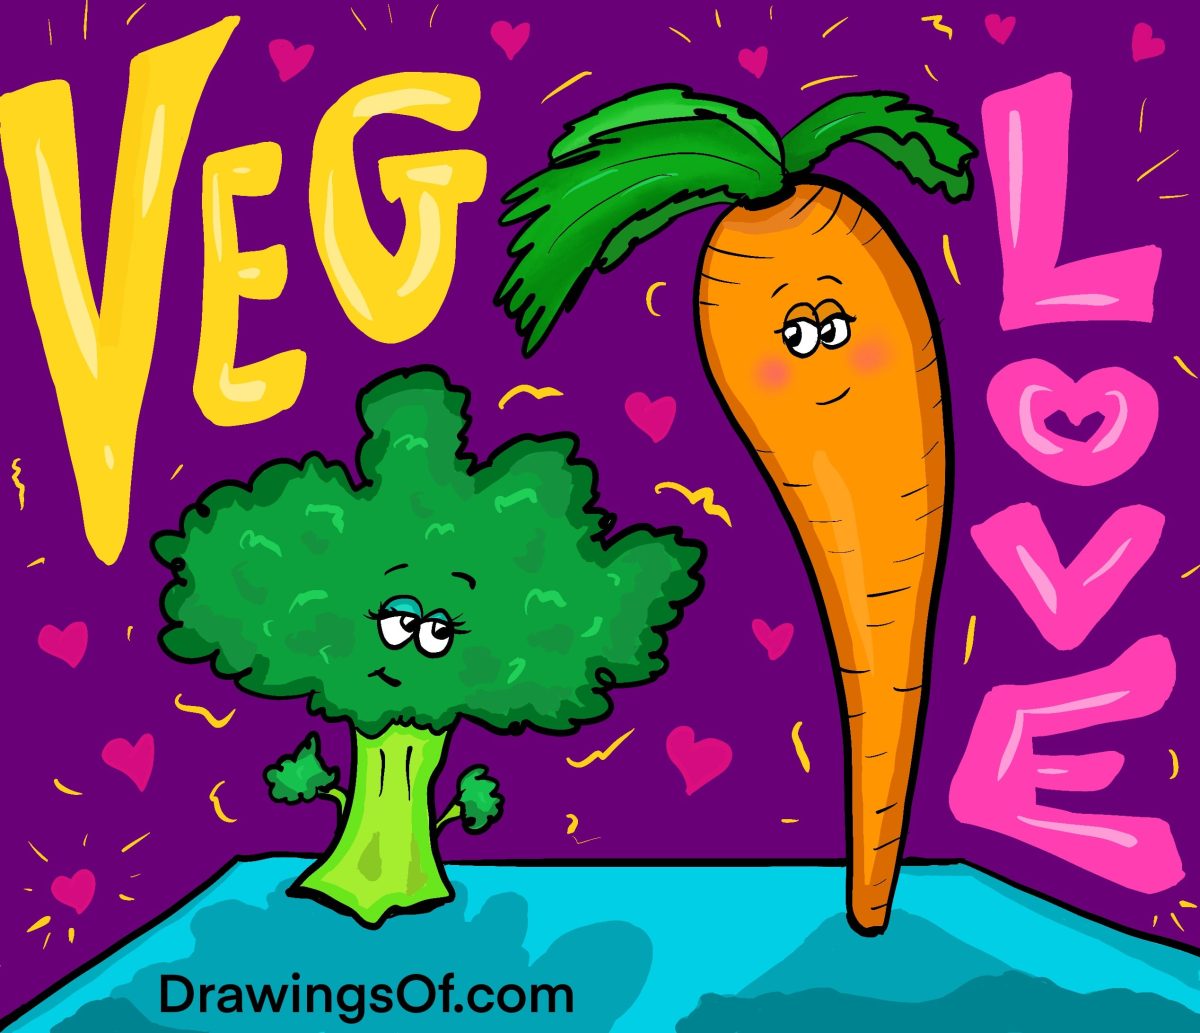 Love veggies